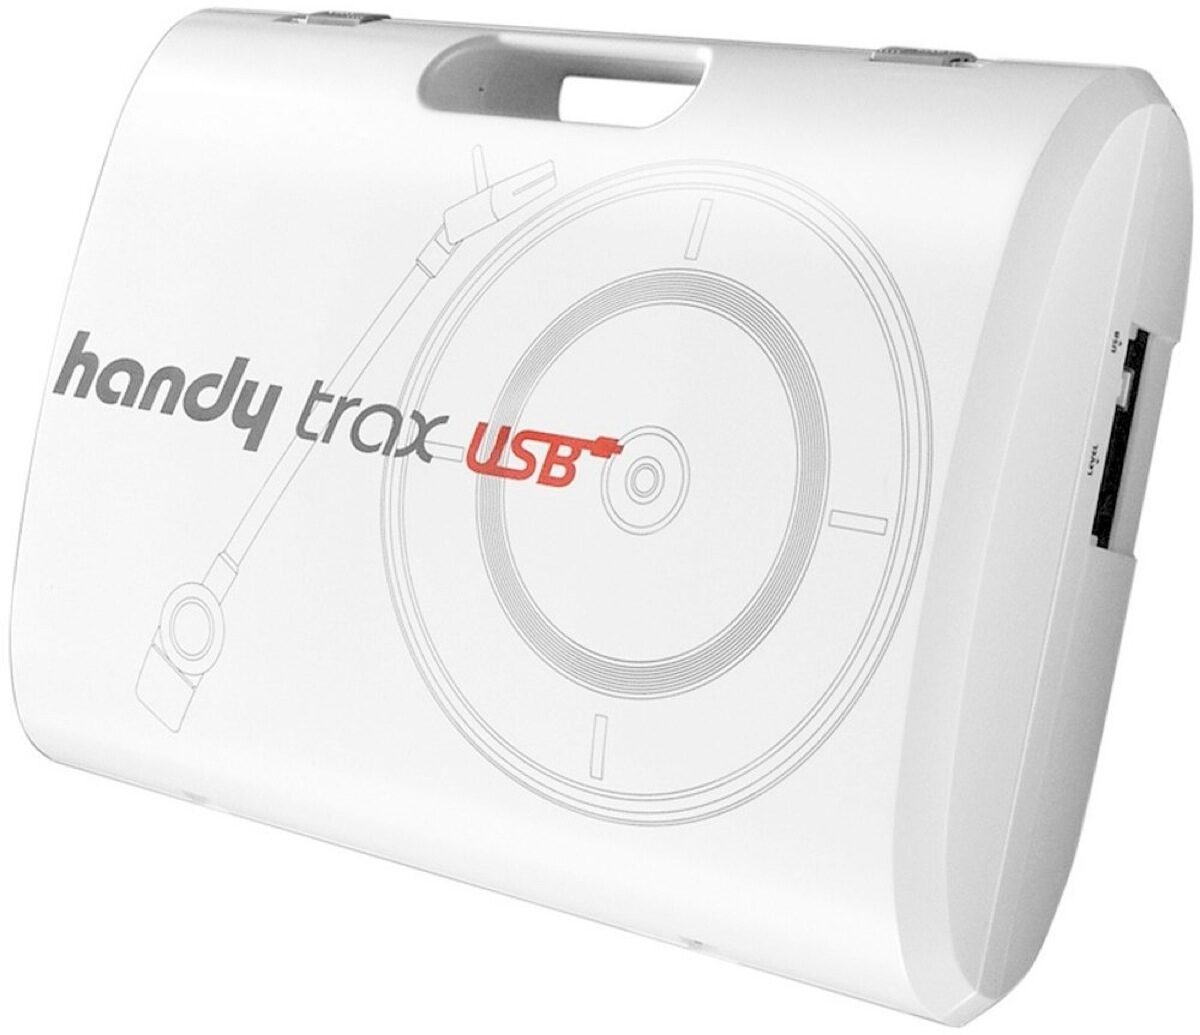 Vestax Handy Trax USB Turntable | zZounds